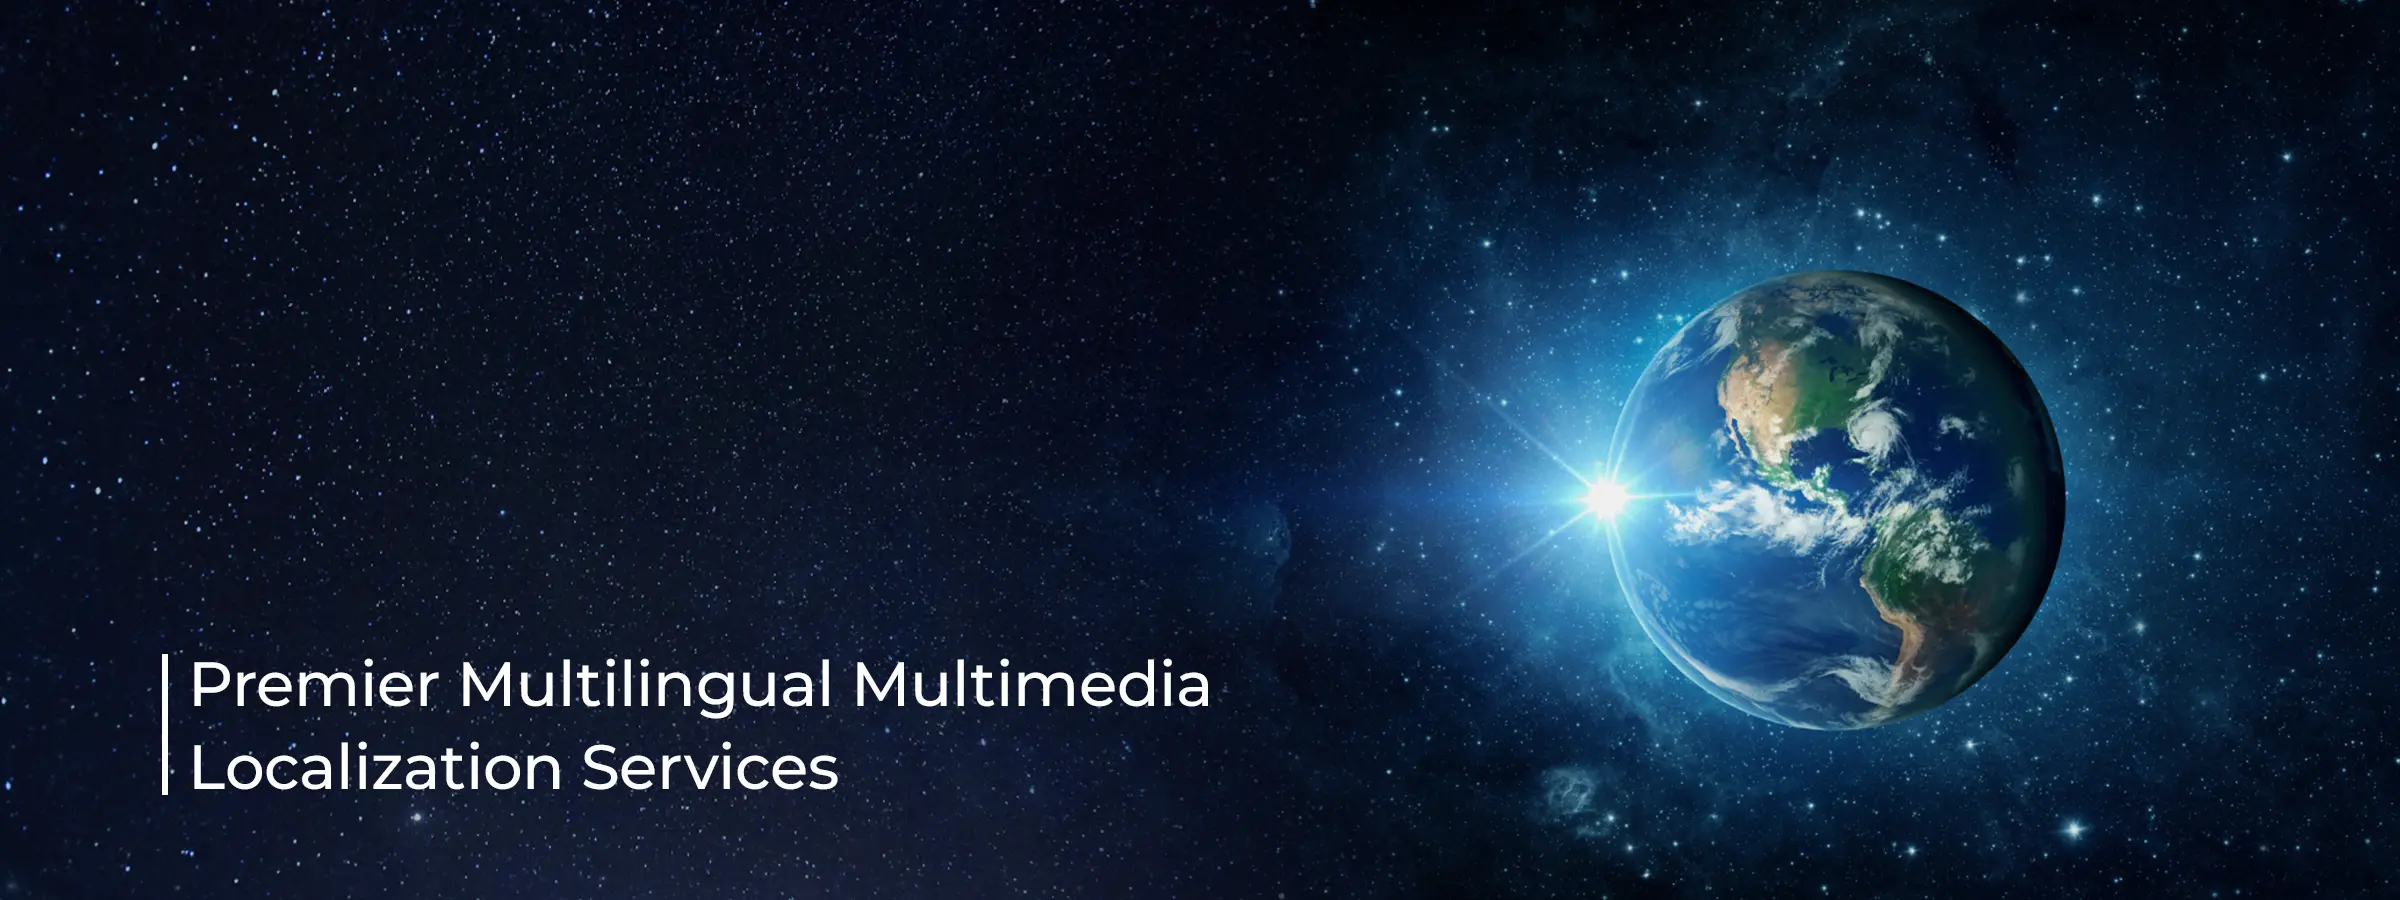 multilingual-multimedia-localization-service-industry